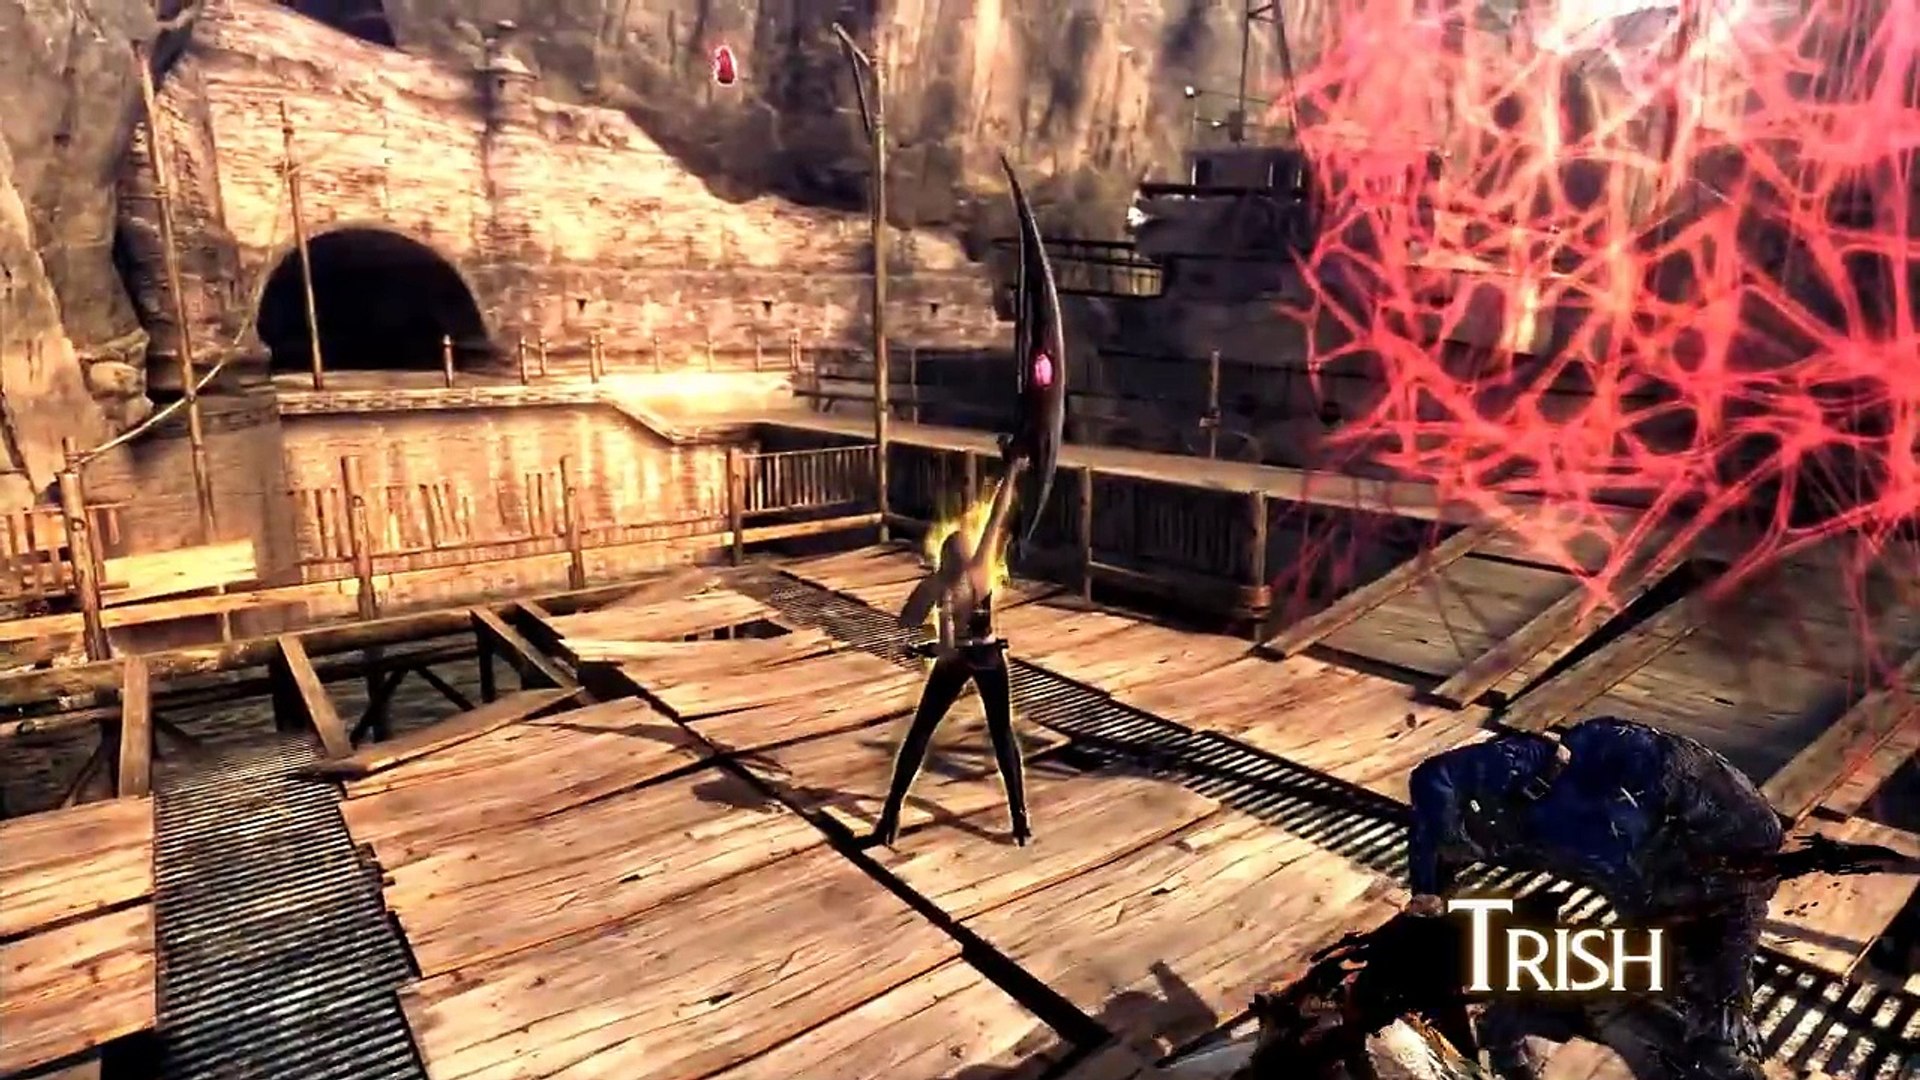 Devil May Cry 4 Special Edition estará disponível a partir de 23 de junho;  confira novo trailer - GameBlast